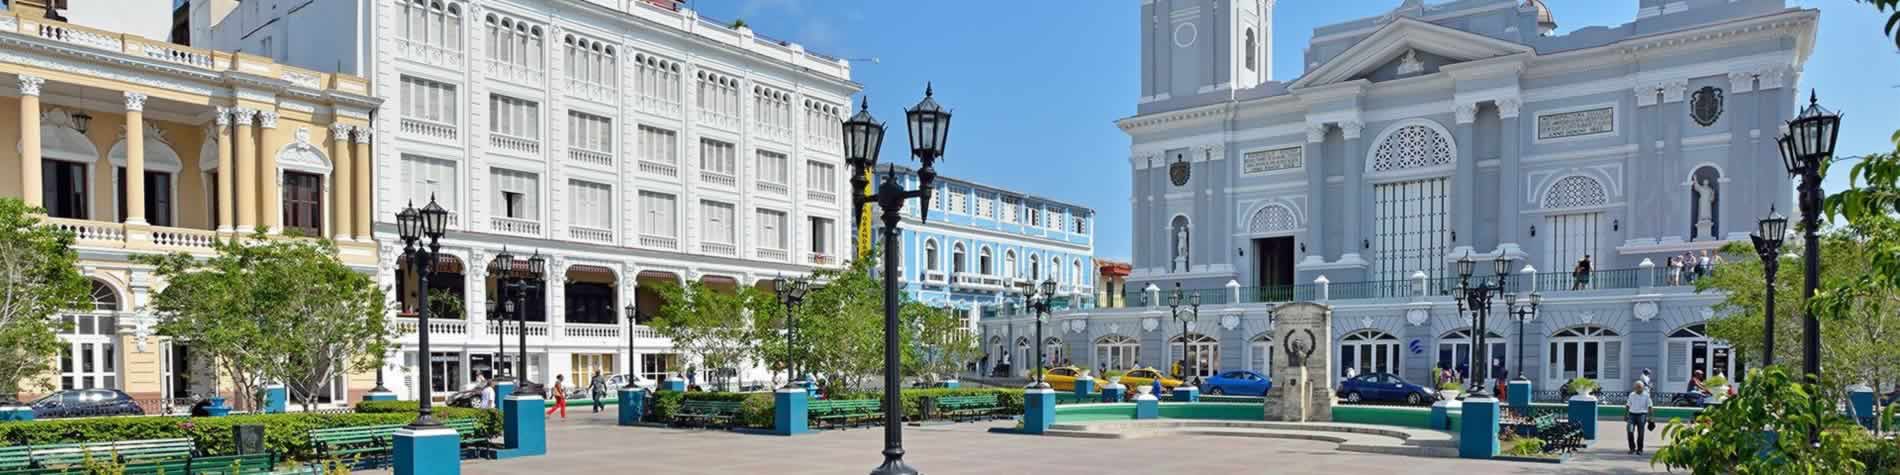 Plaza at city center